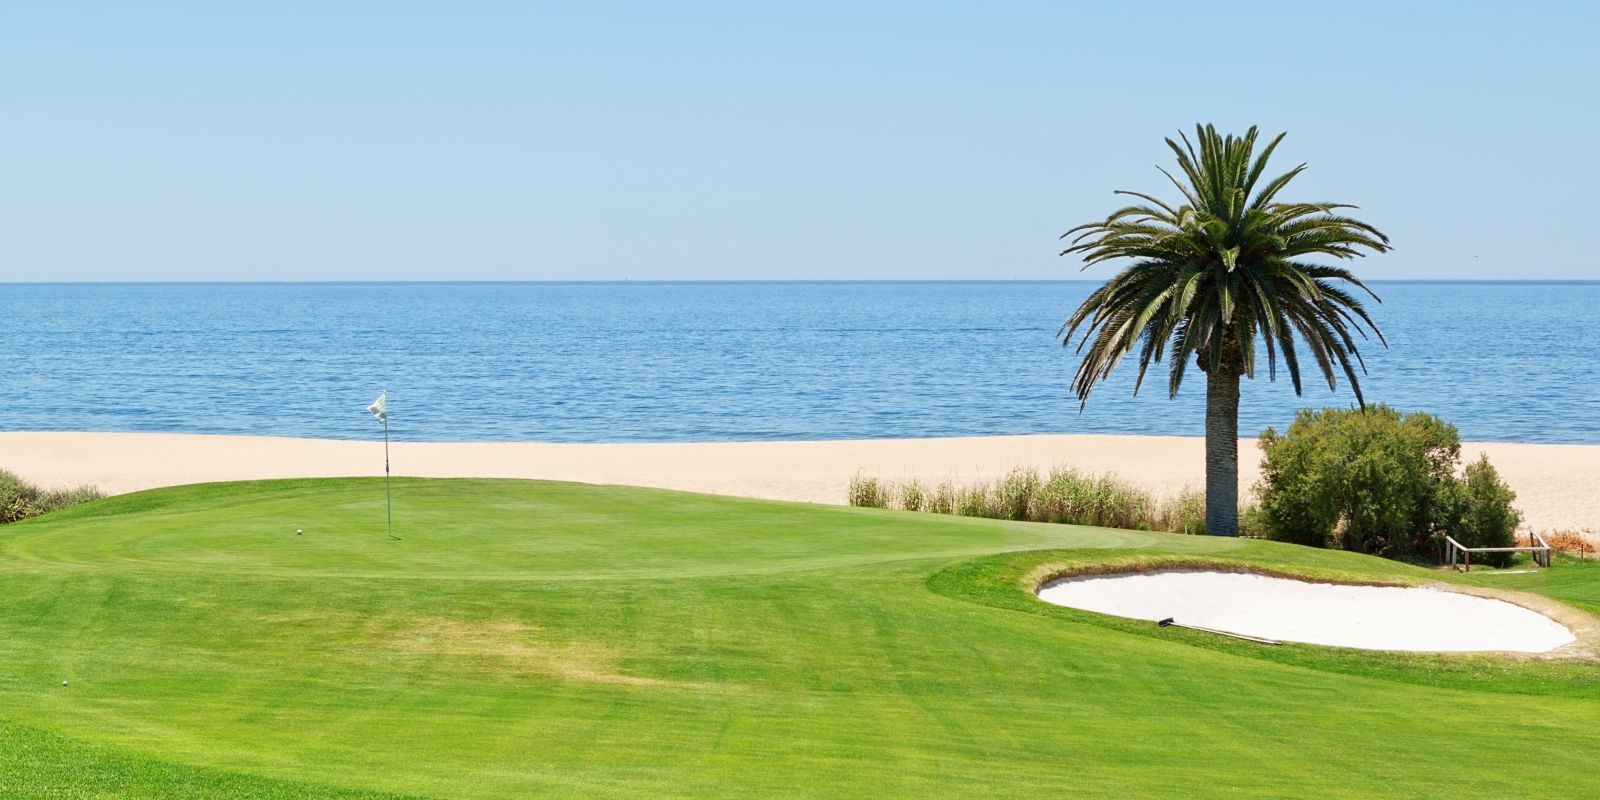 Golf course, Algarve, Portugal